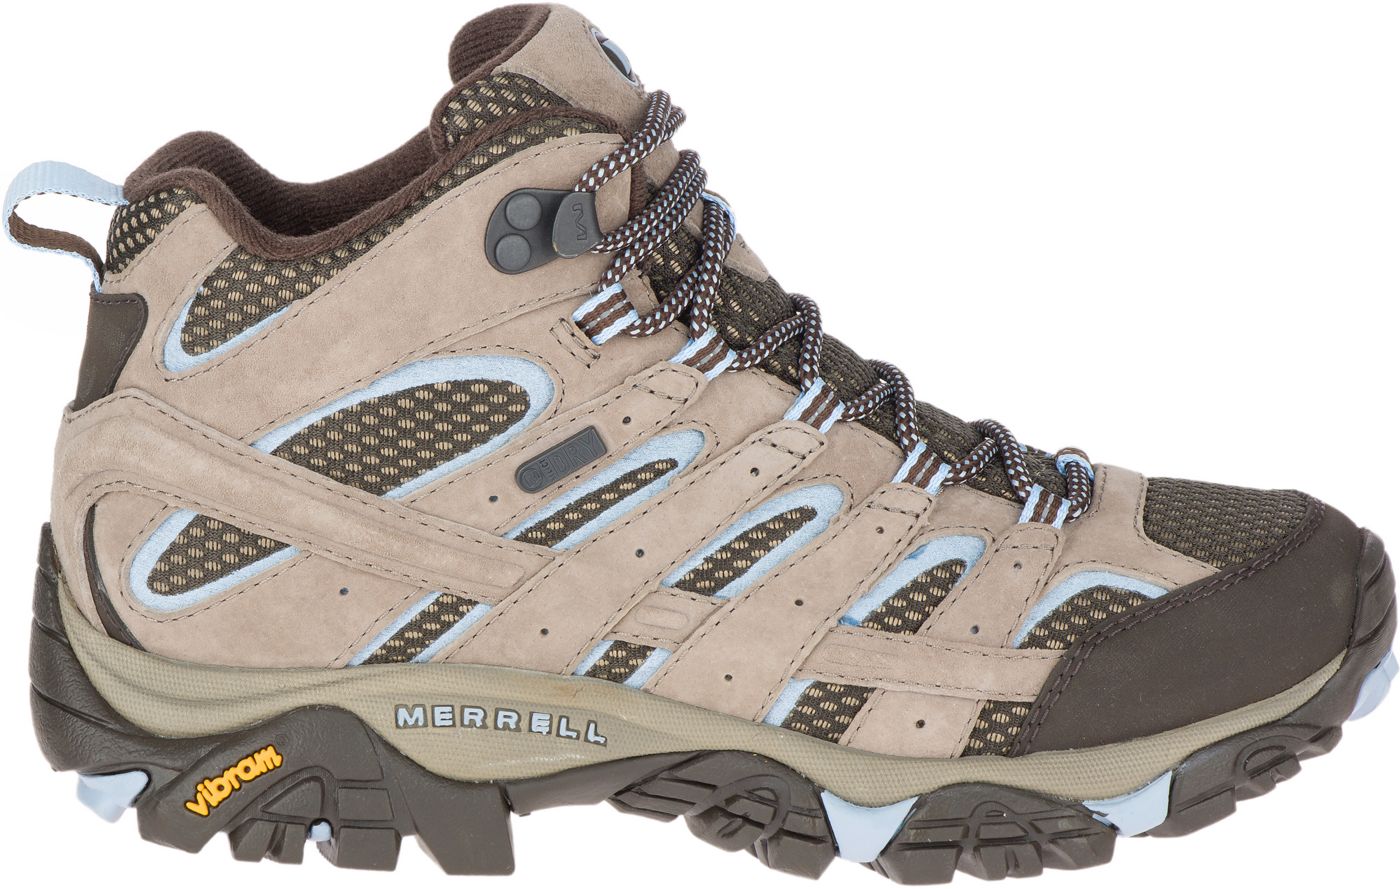 Merrell Women's Moab 2 GTX Waterproof Hiking Shoes | DICK'S Sporting Goods